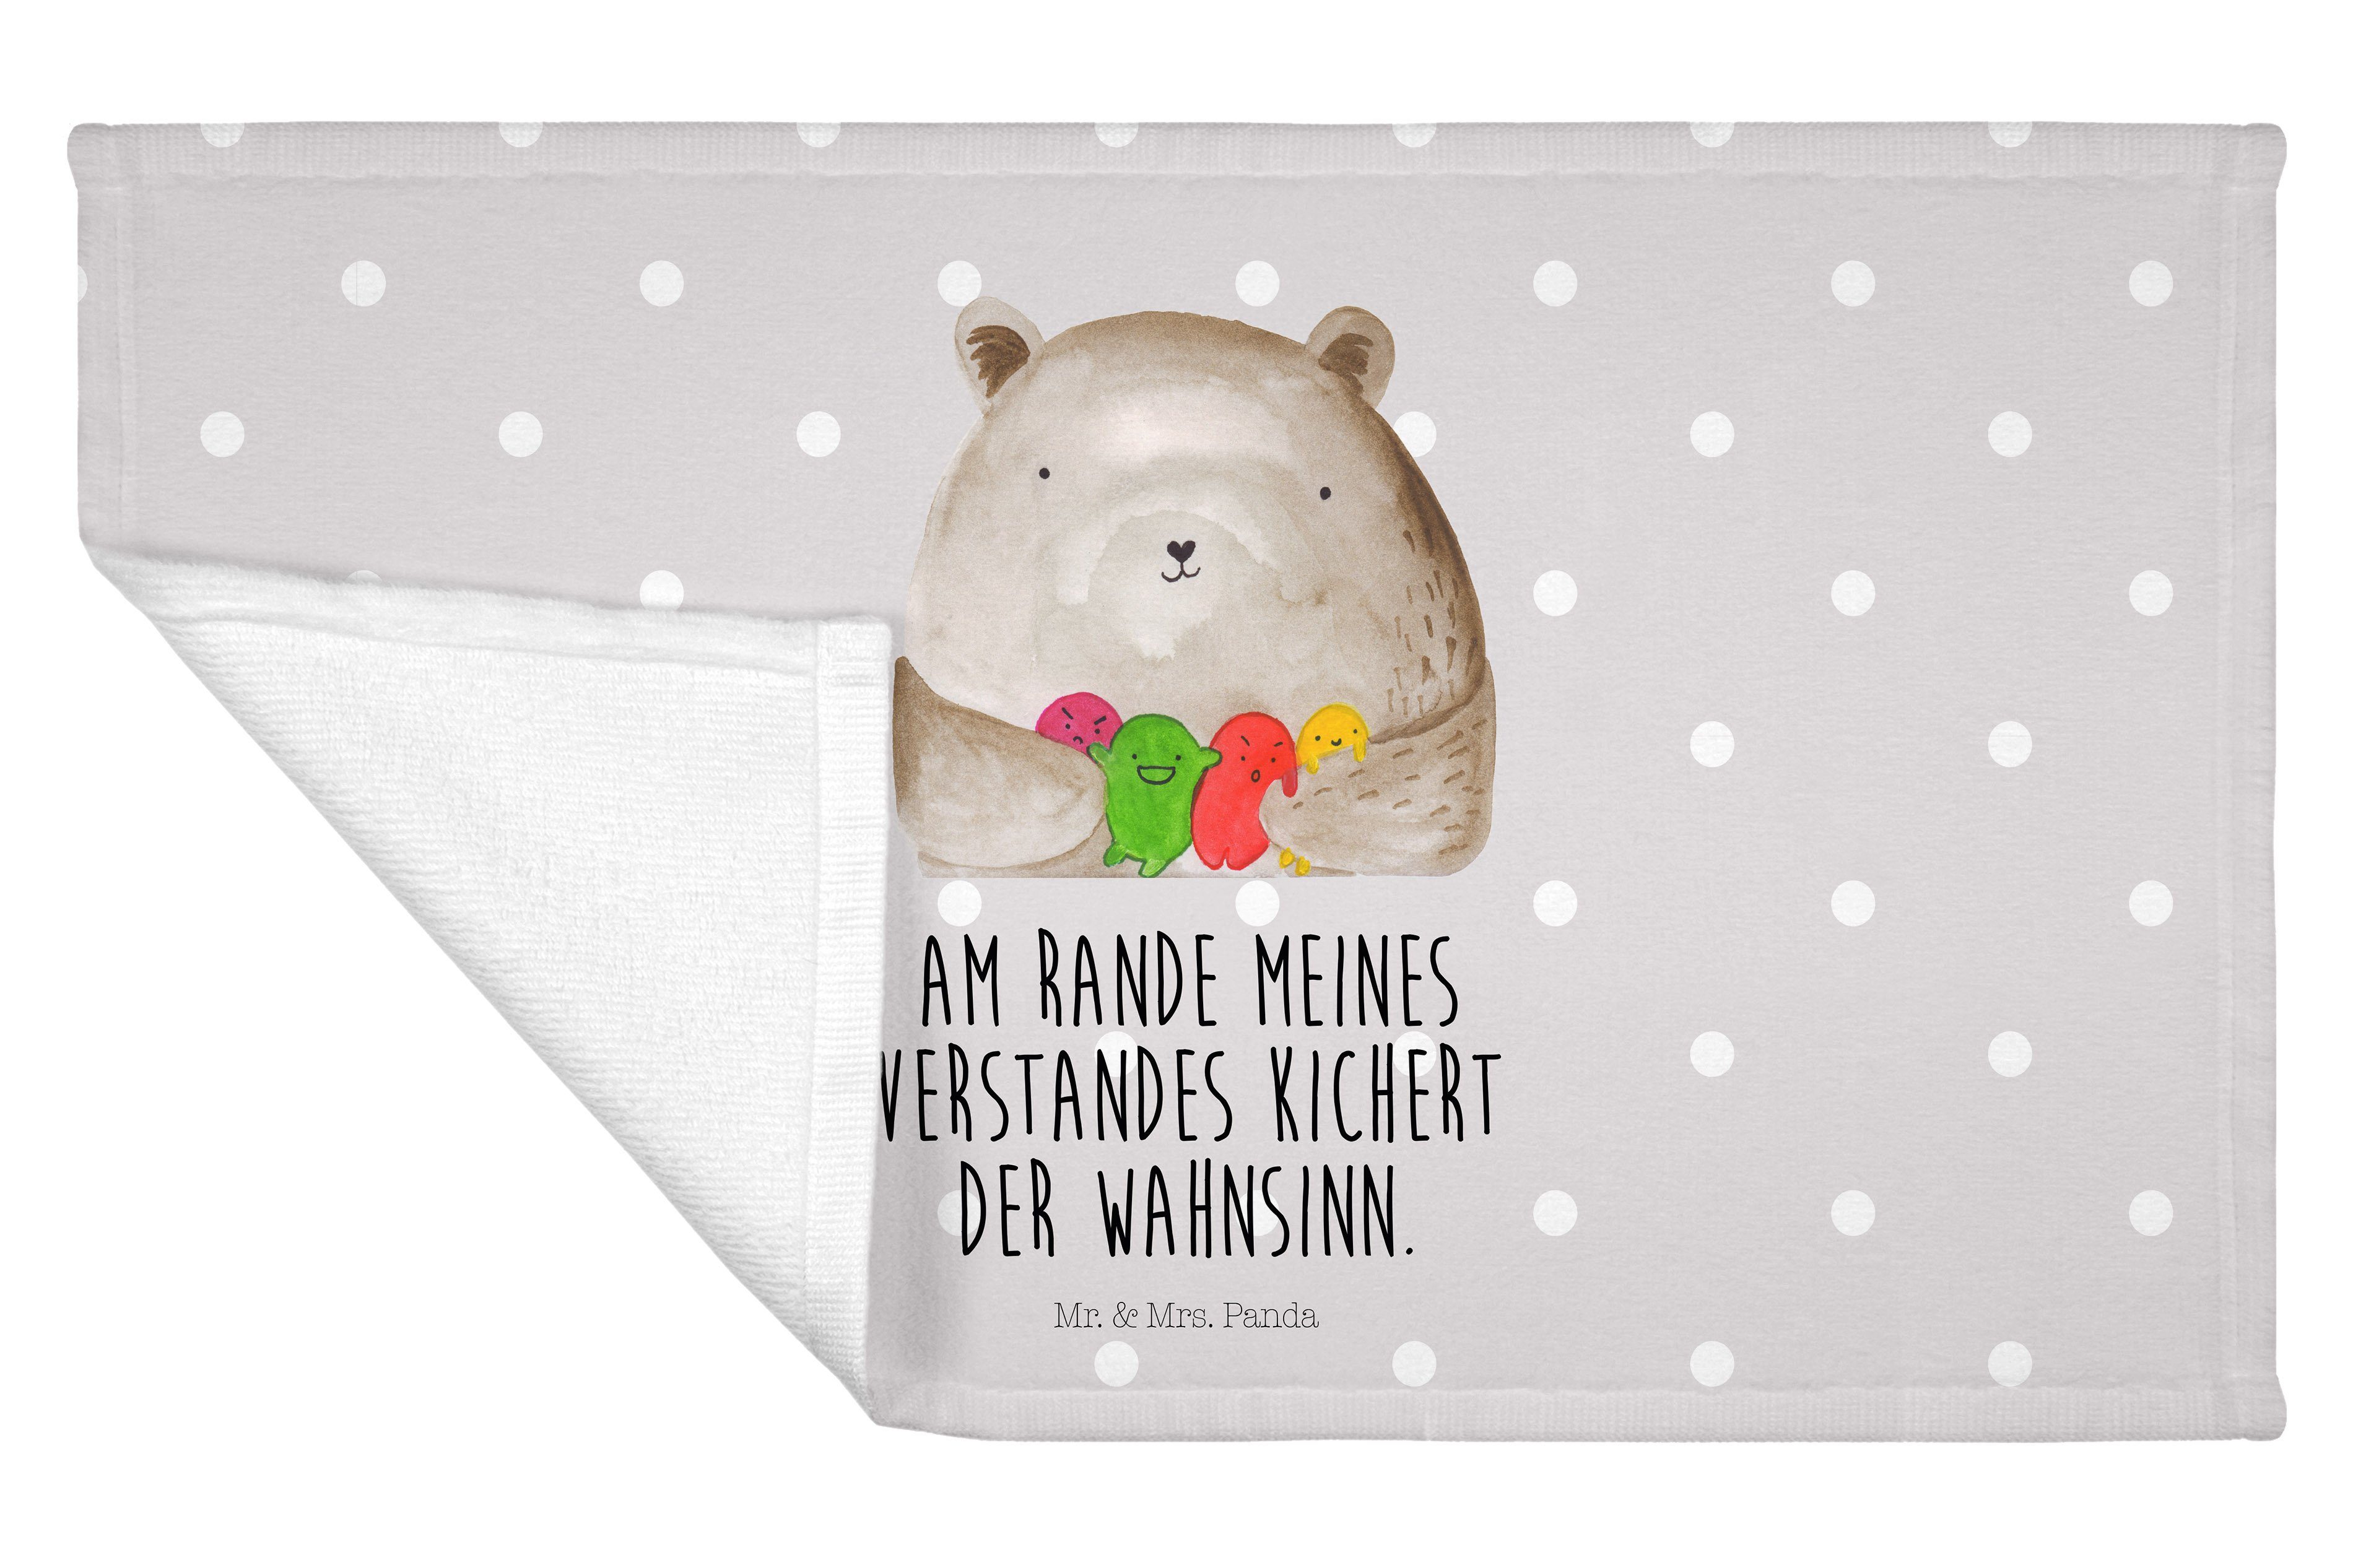 Mr. & Mrs. Panda Handtuch Pastell Geschenk, Verrückt, - Bär Teddy, (1-St) Ted, - Grau Gefühl Gästetuch